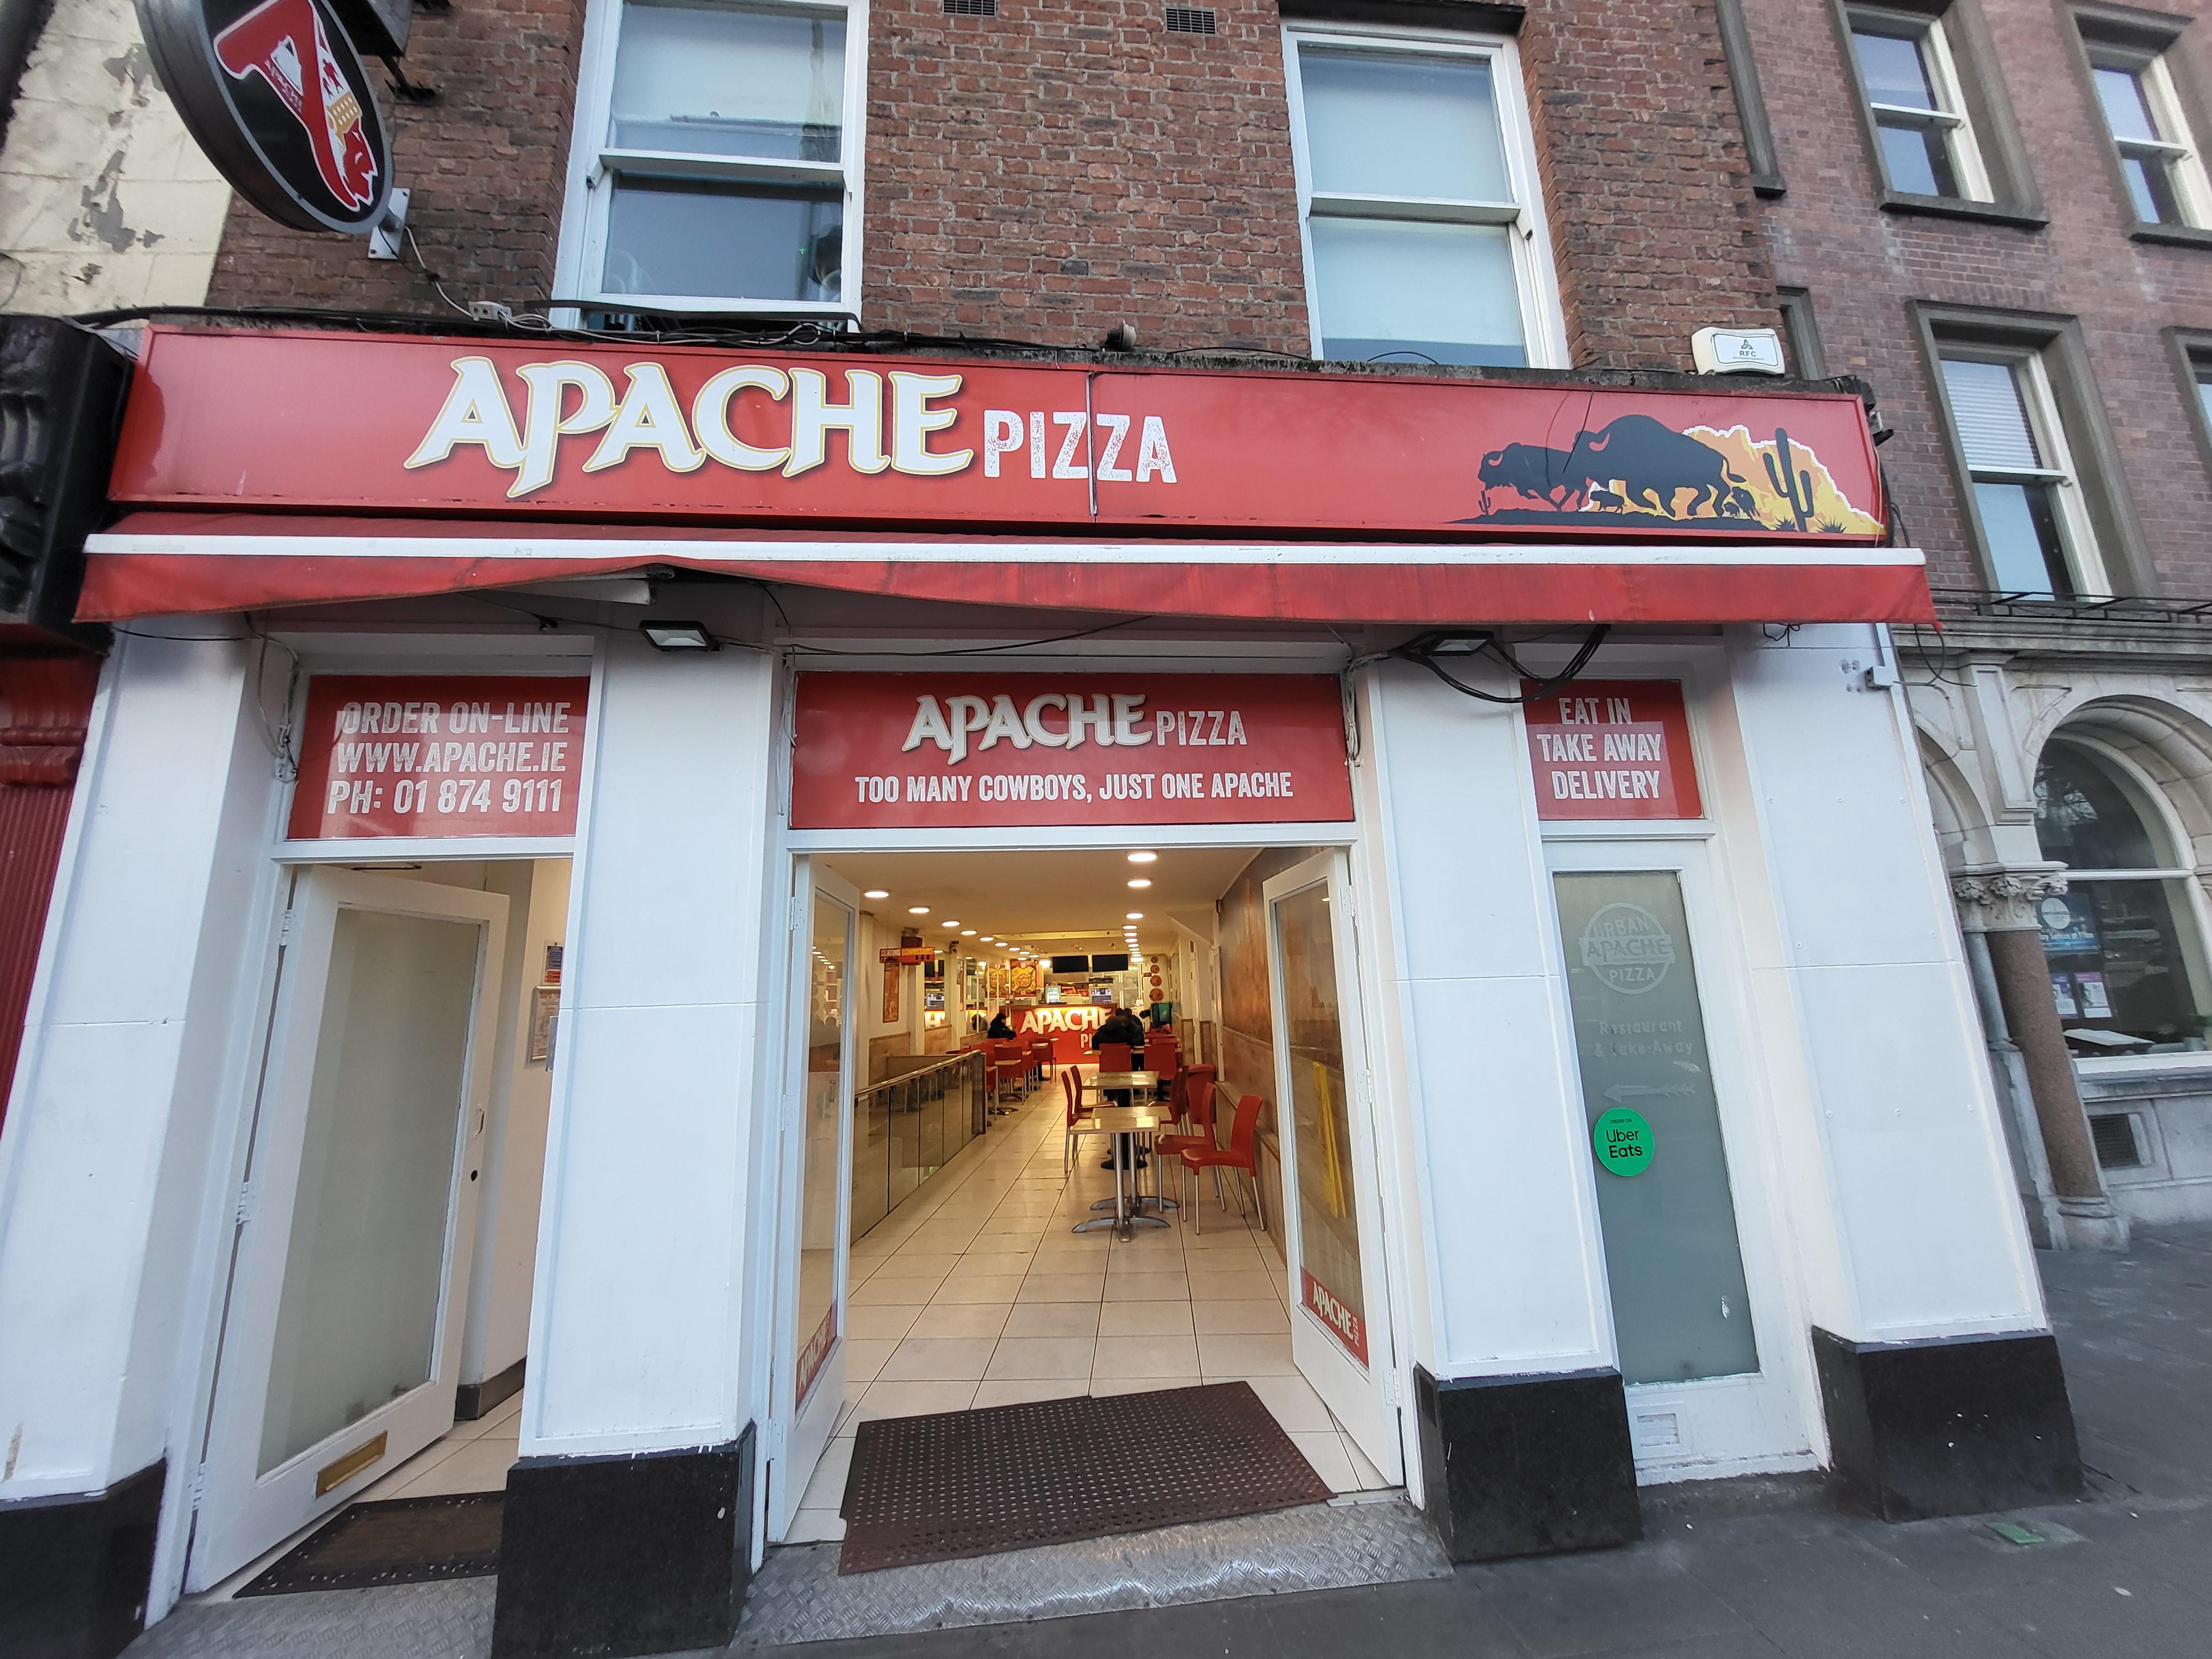 Bachelors walk store front Apache Pizza Bachelor's Walk Dublin (01) 874 9111